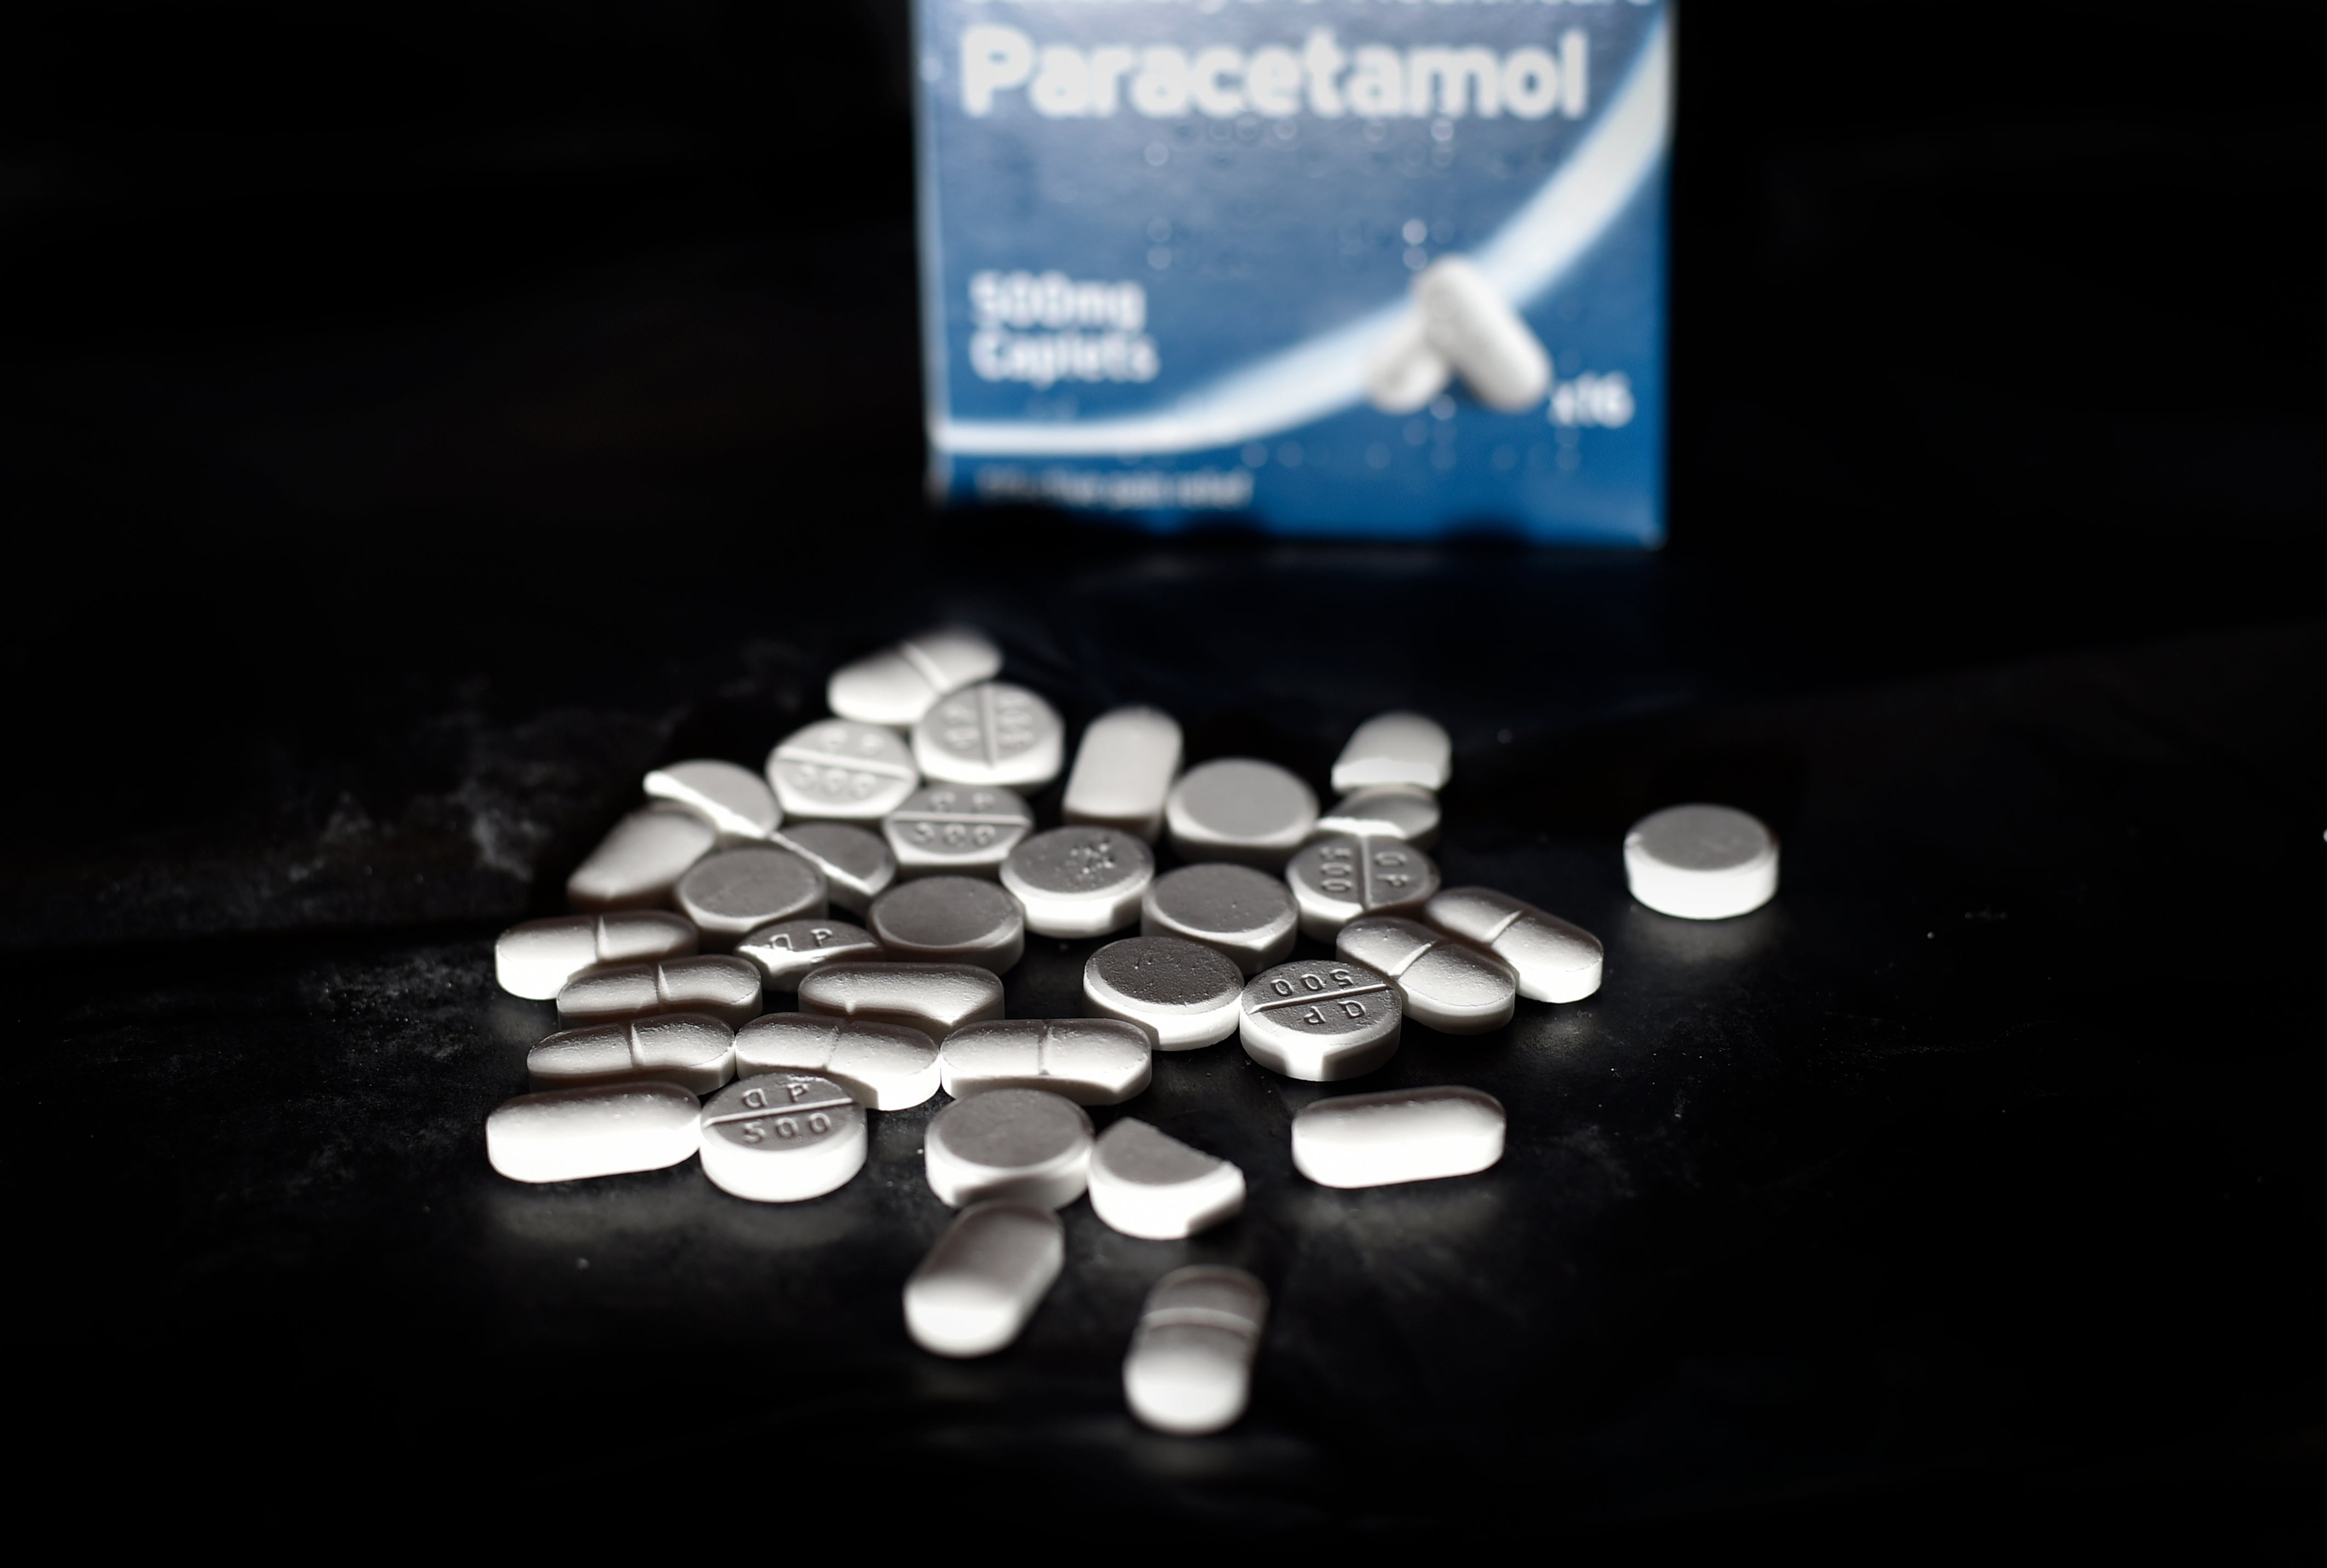 What should I take paracetamol for?, Drugs